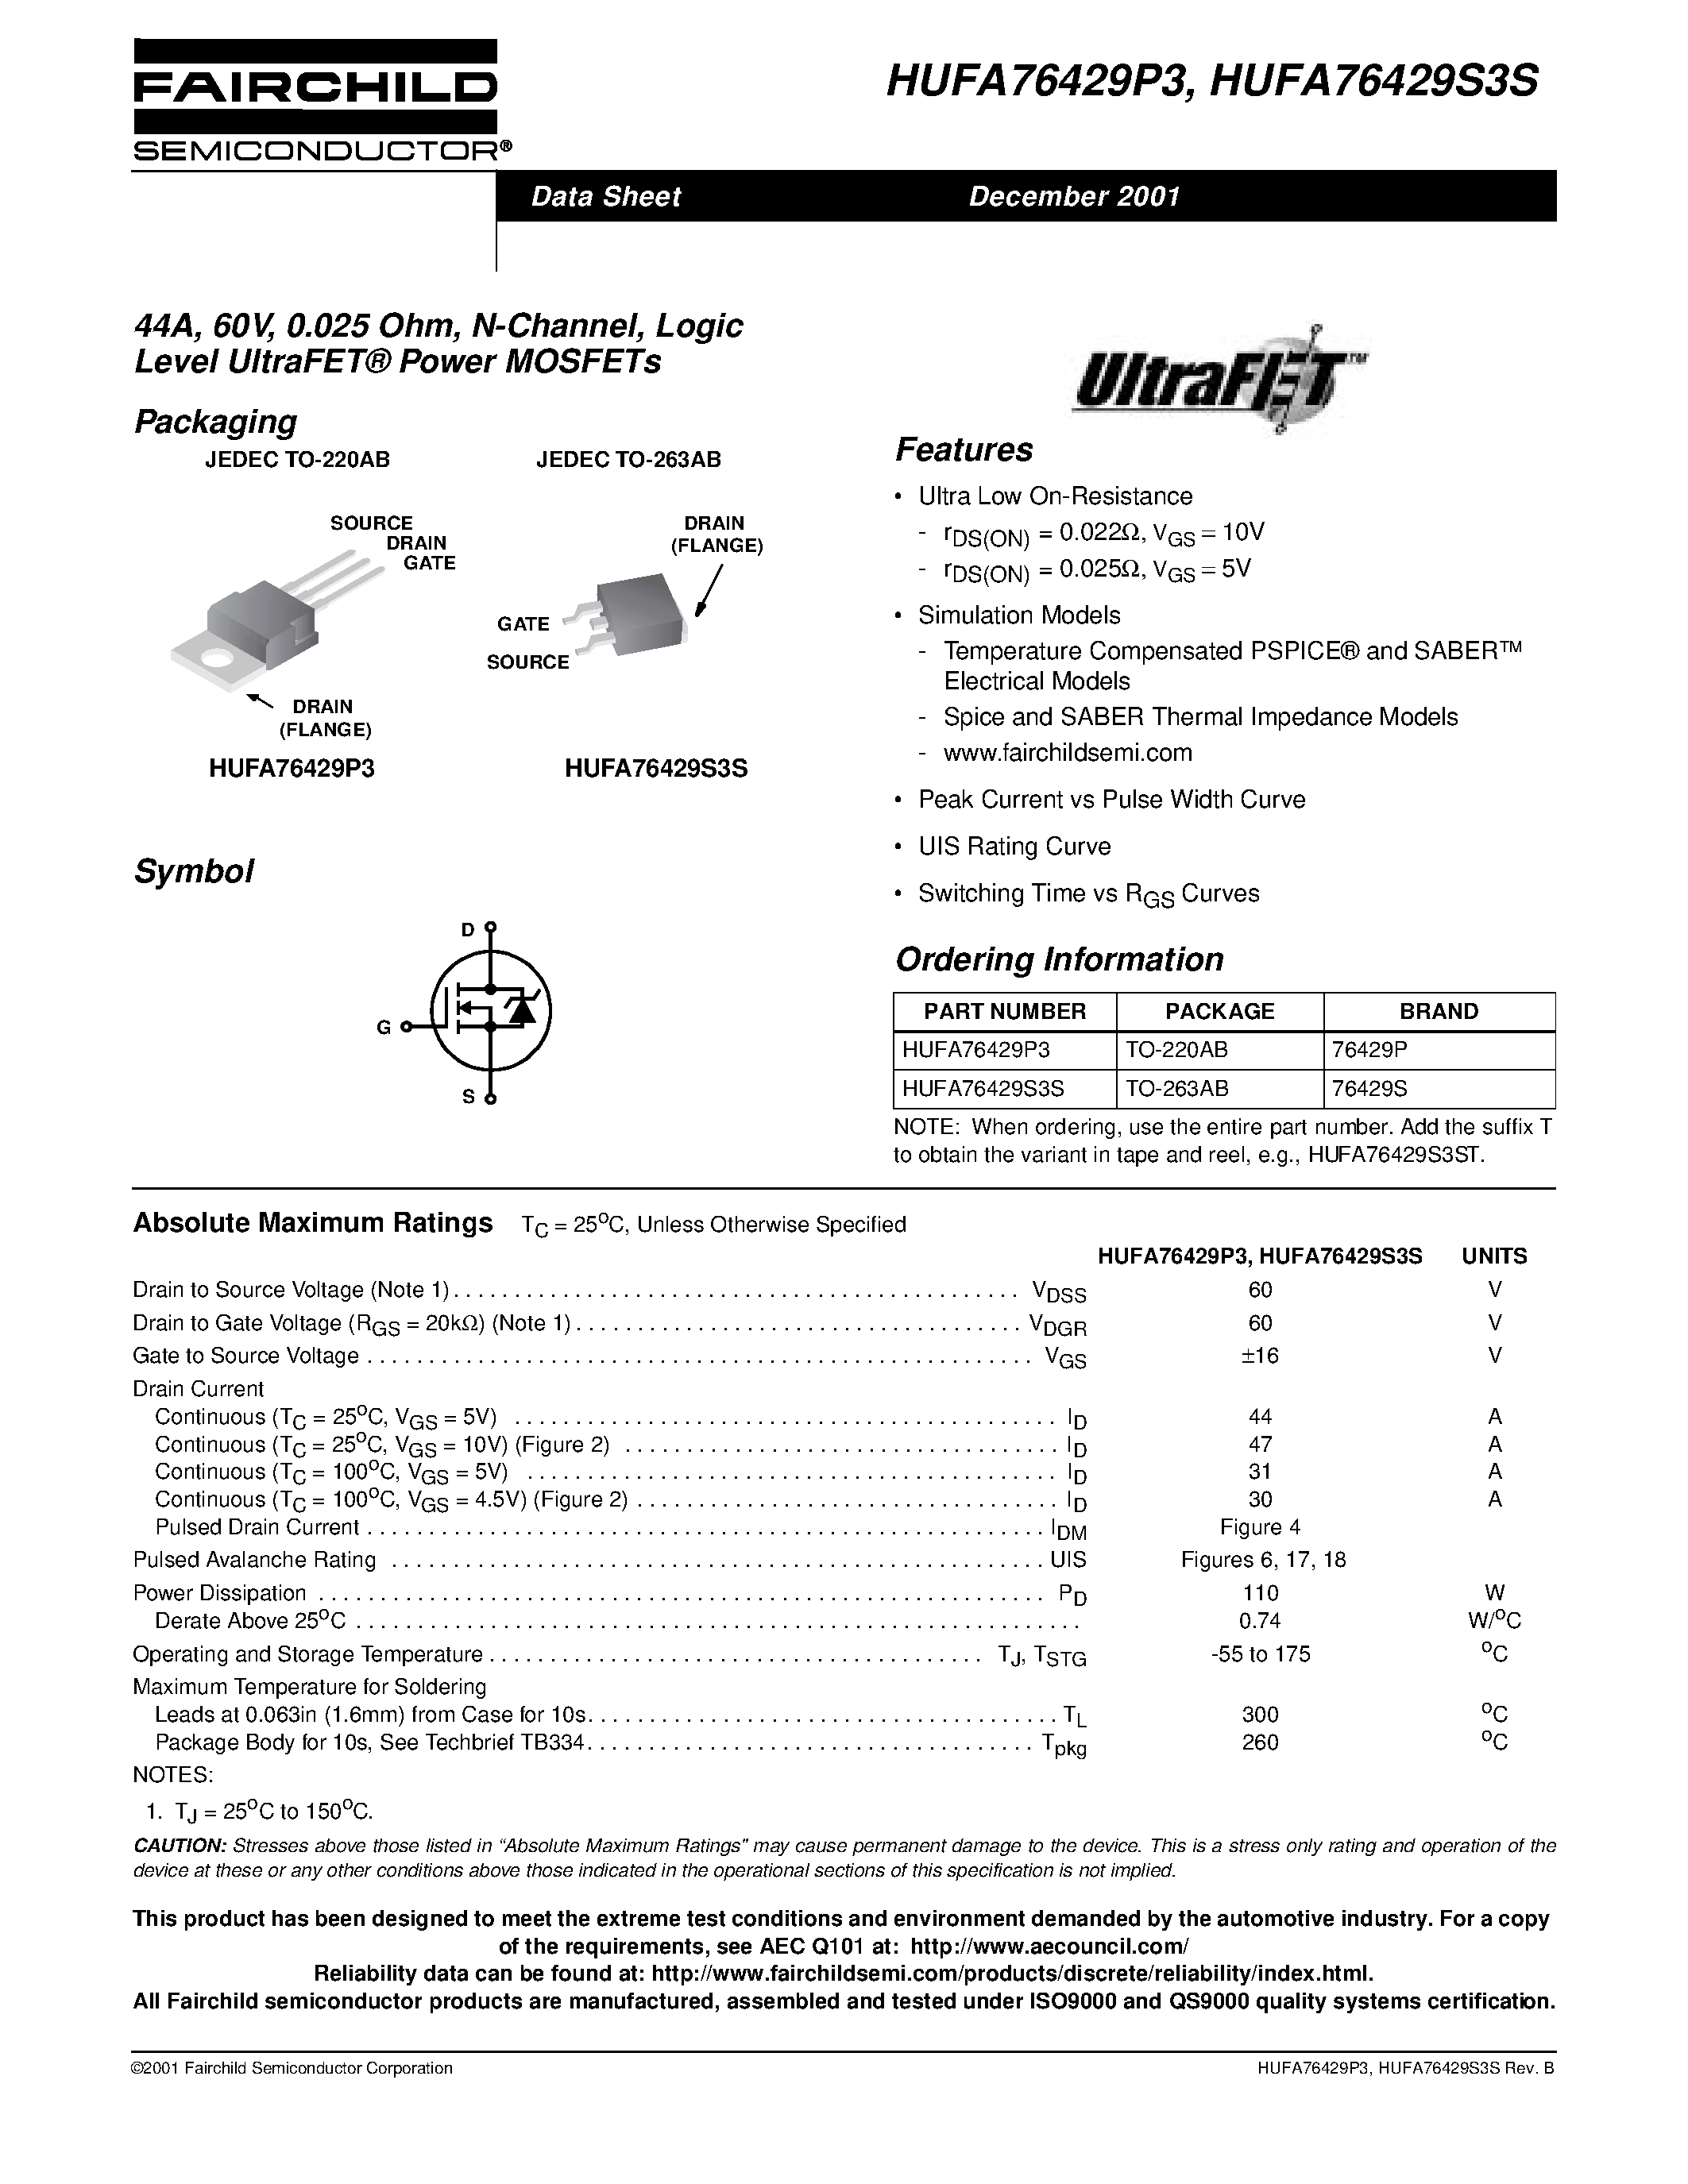 Даташит HUFA76429P3 - 44A/ 60V/ 0.025 Ohm/ N-Channel/ Logic Level UltraFET Power MOSFETs страница 1